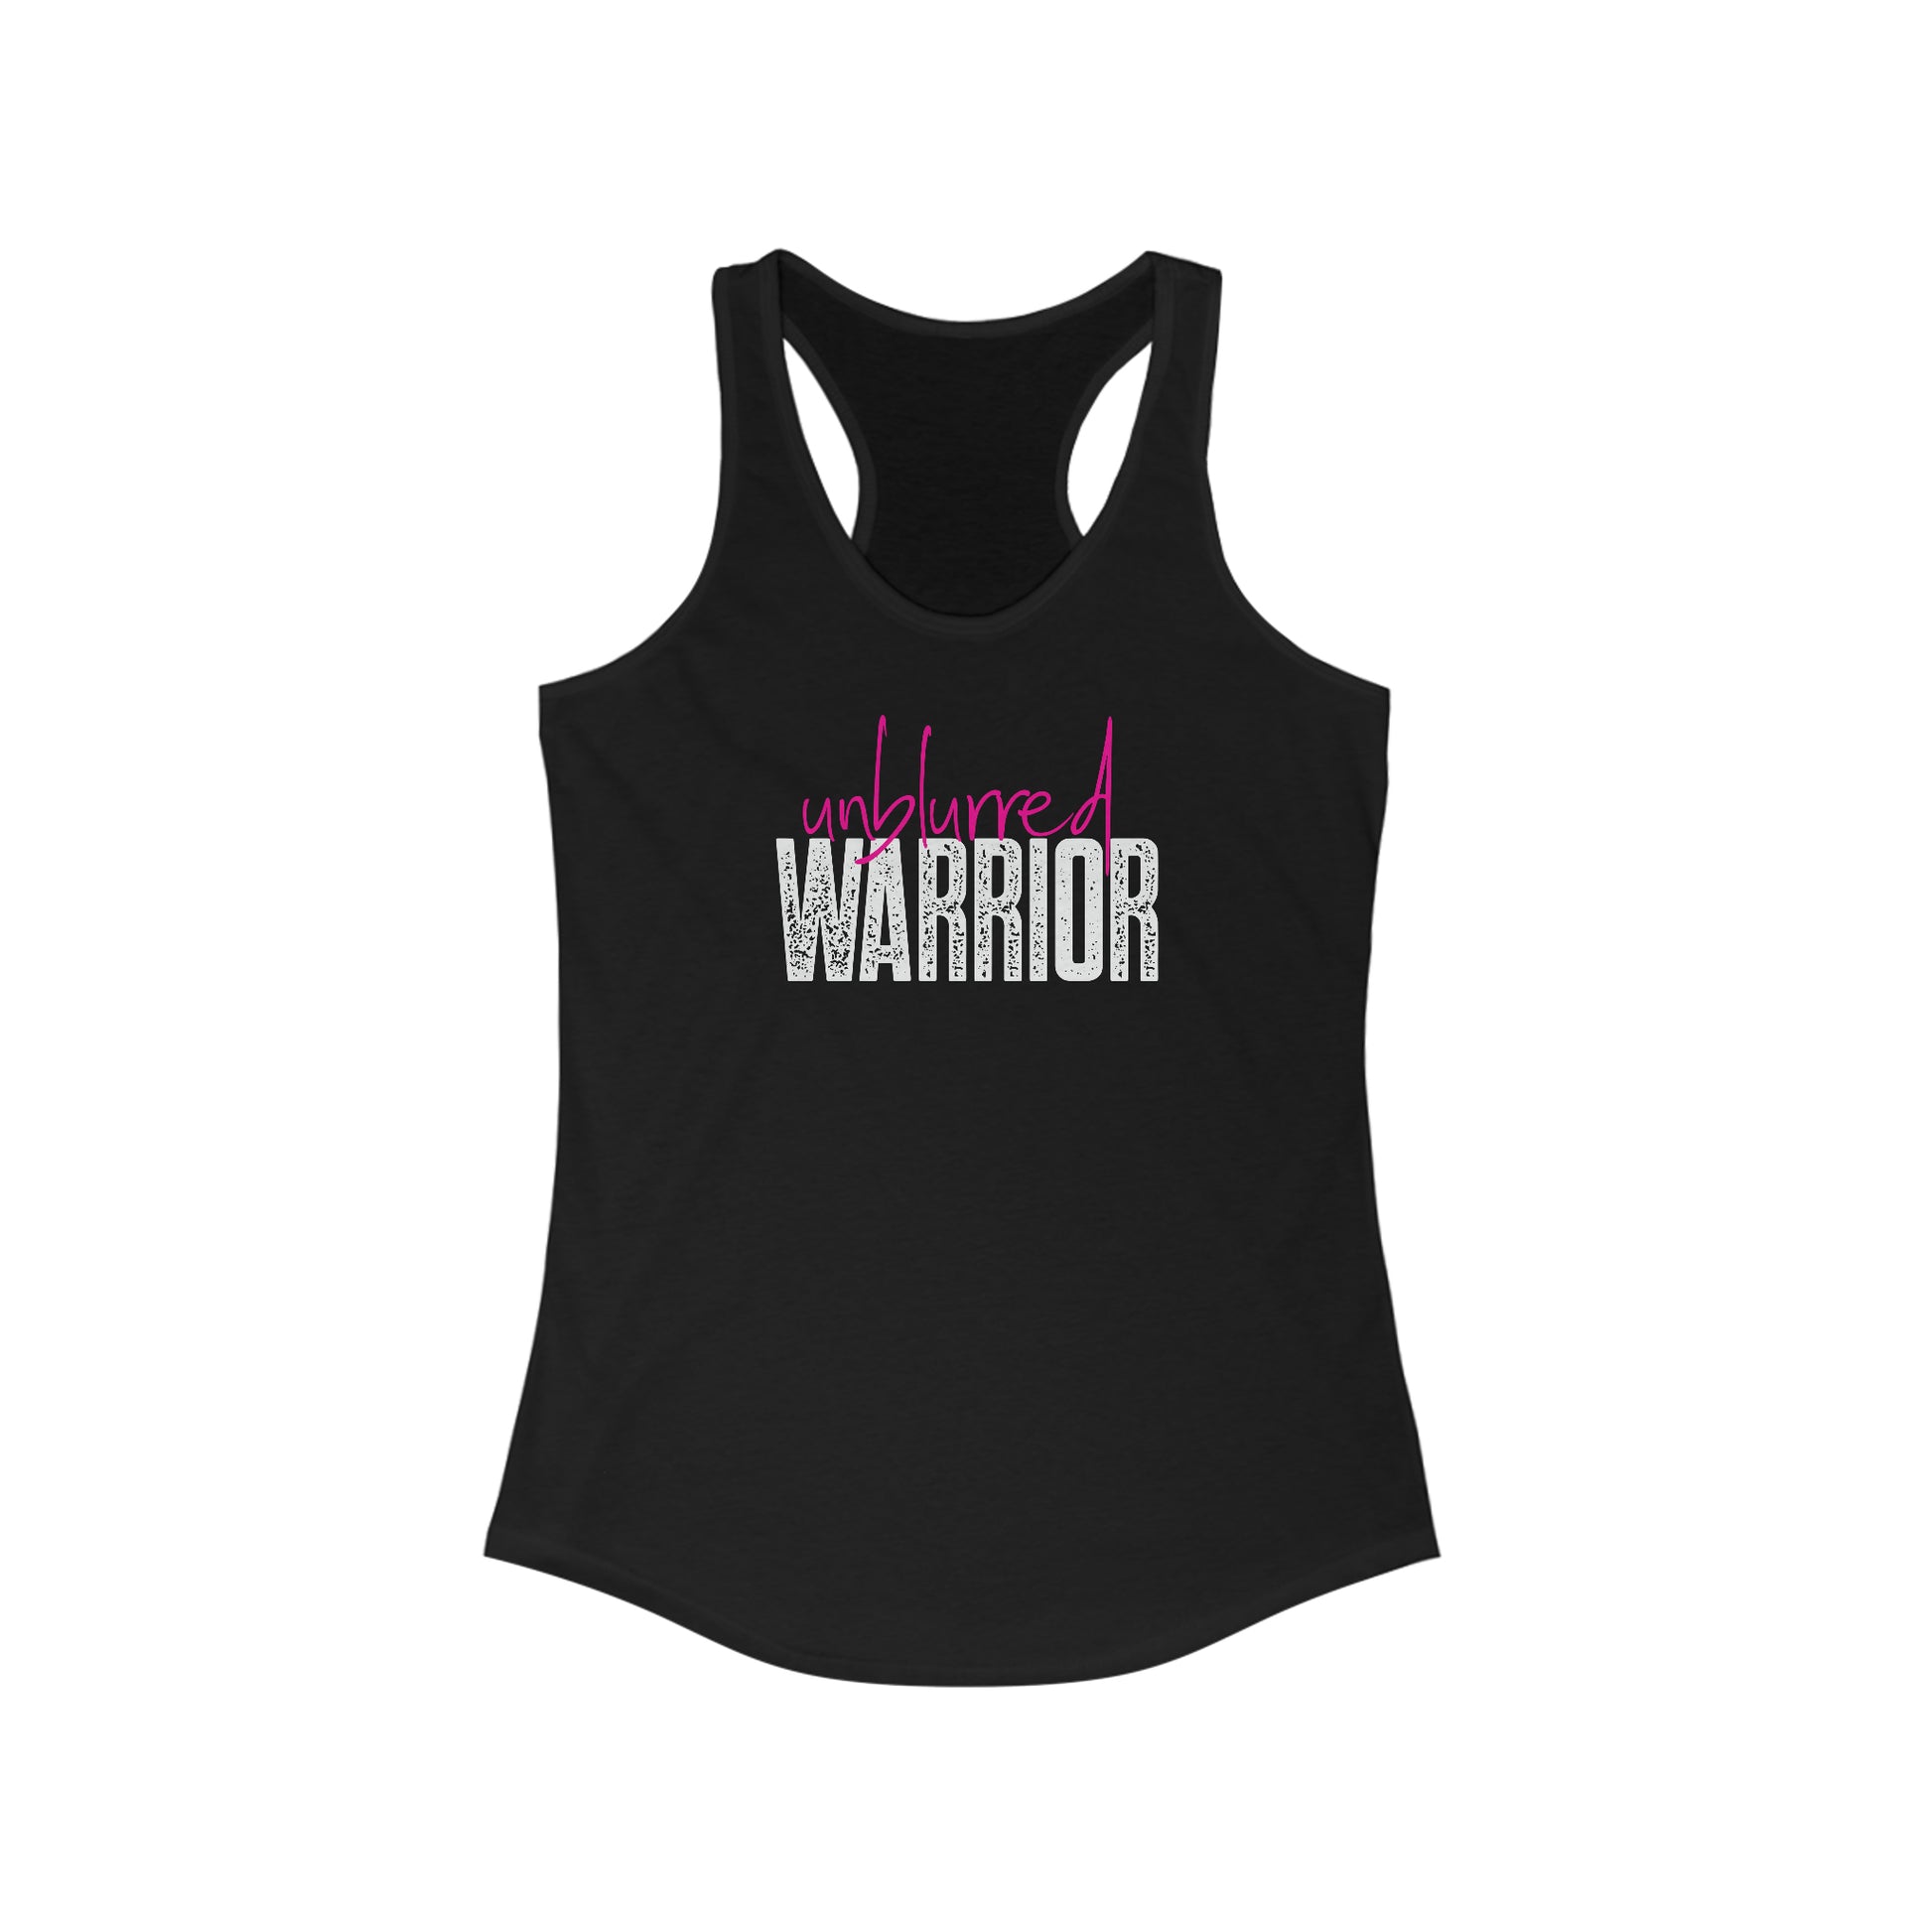 Unblurred Warrior w/ pink- Women's Racerback Tank